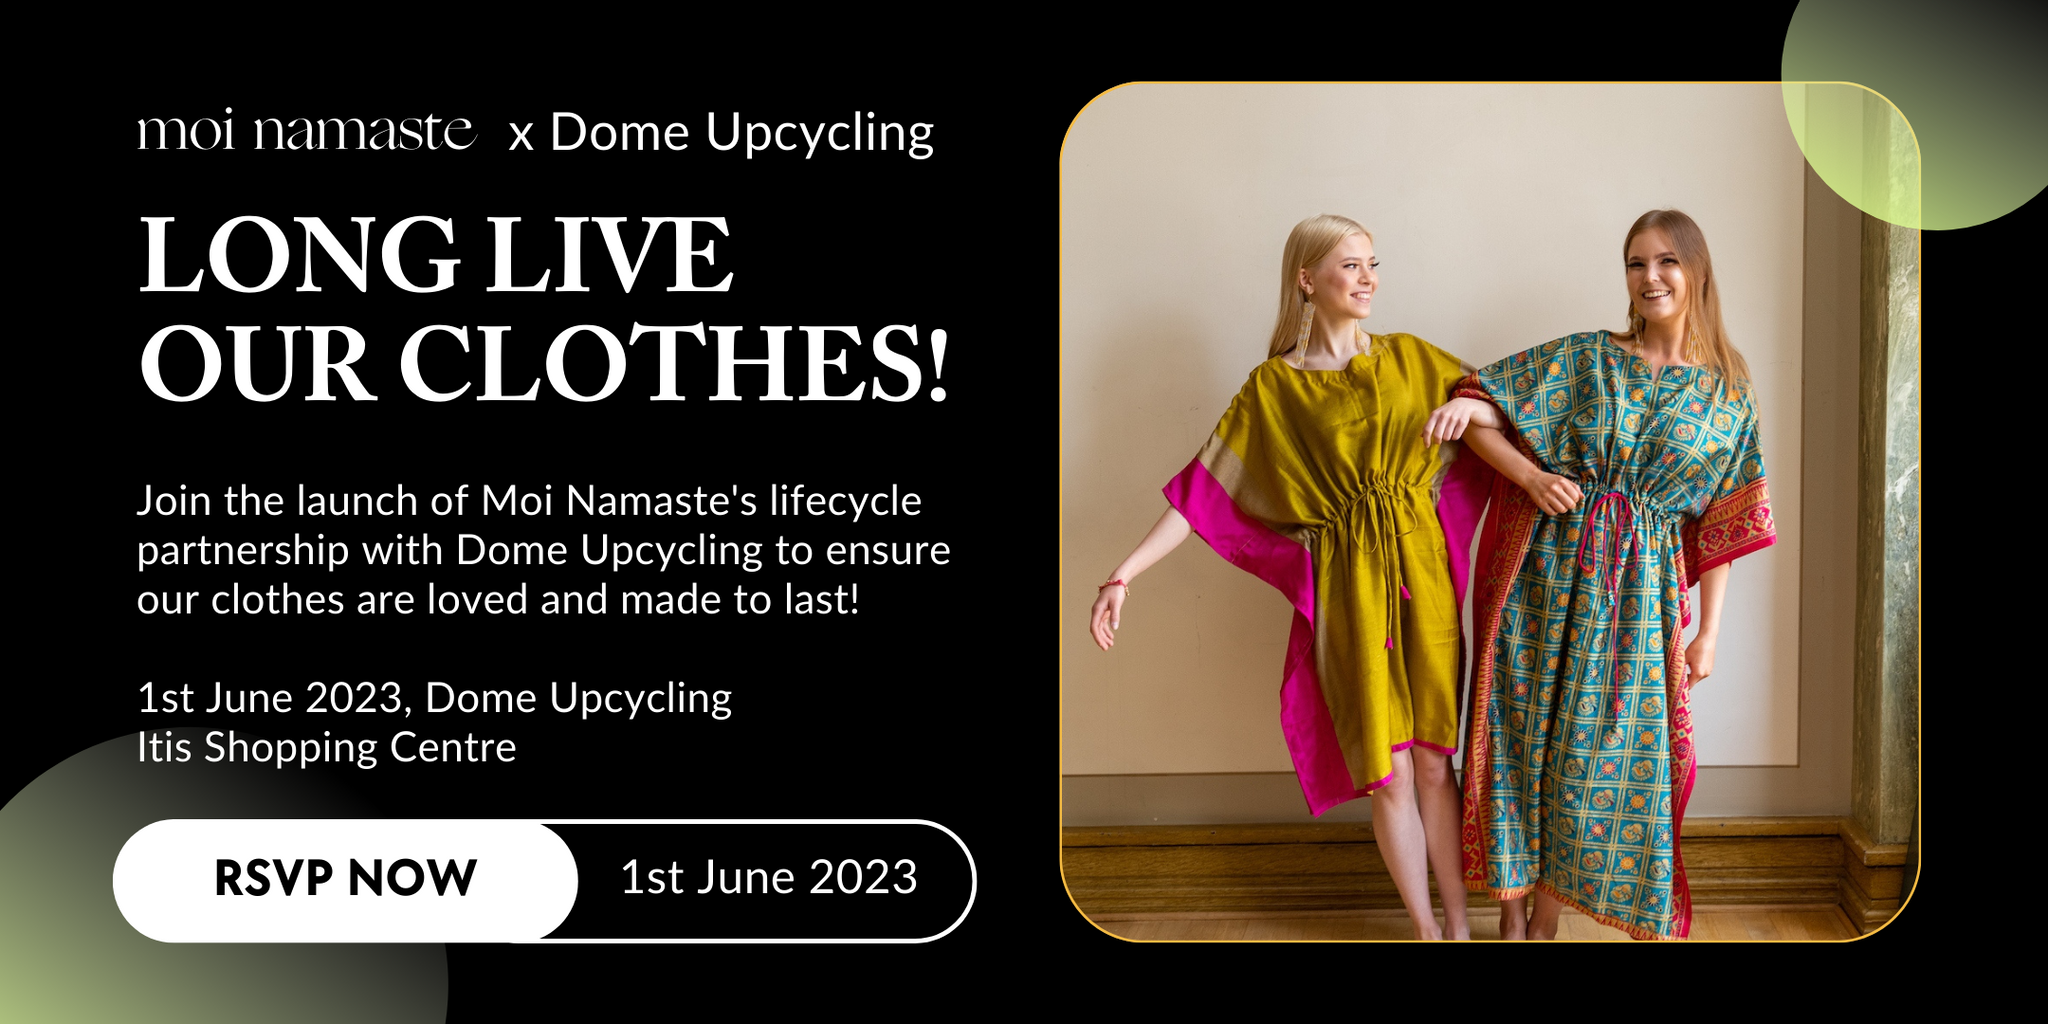 Long Live Your Clothes Event!